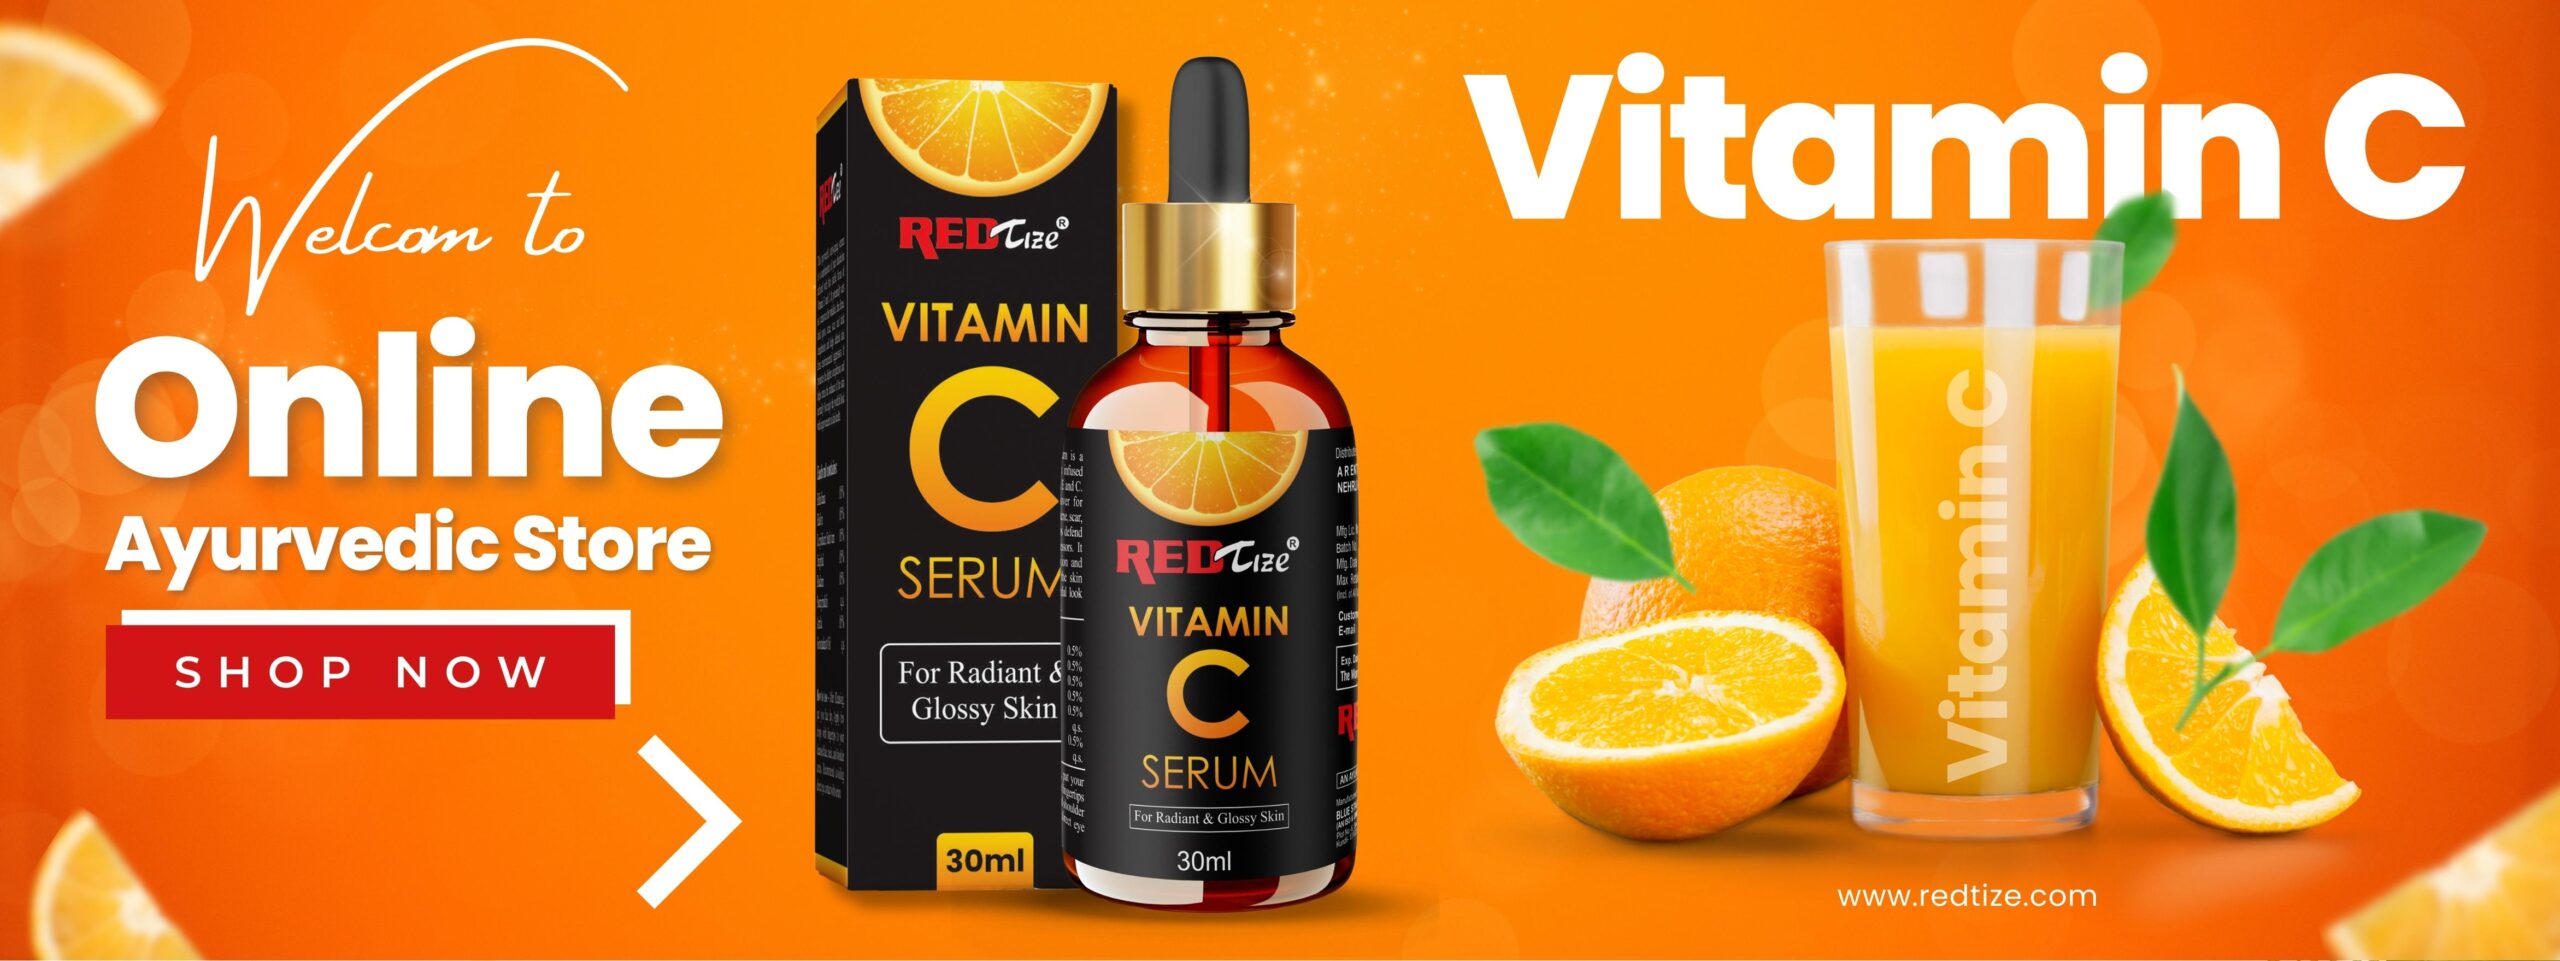 RedTize Vitamin C Serum